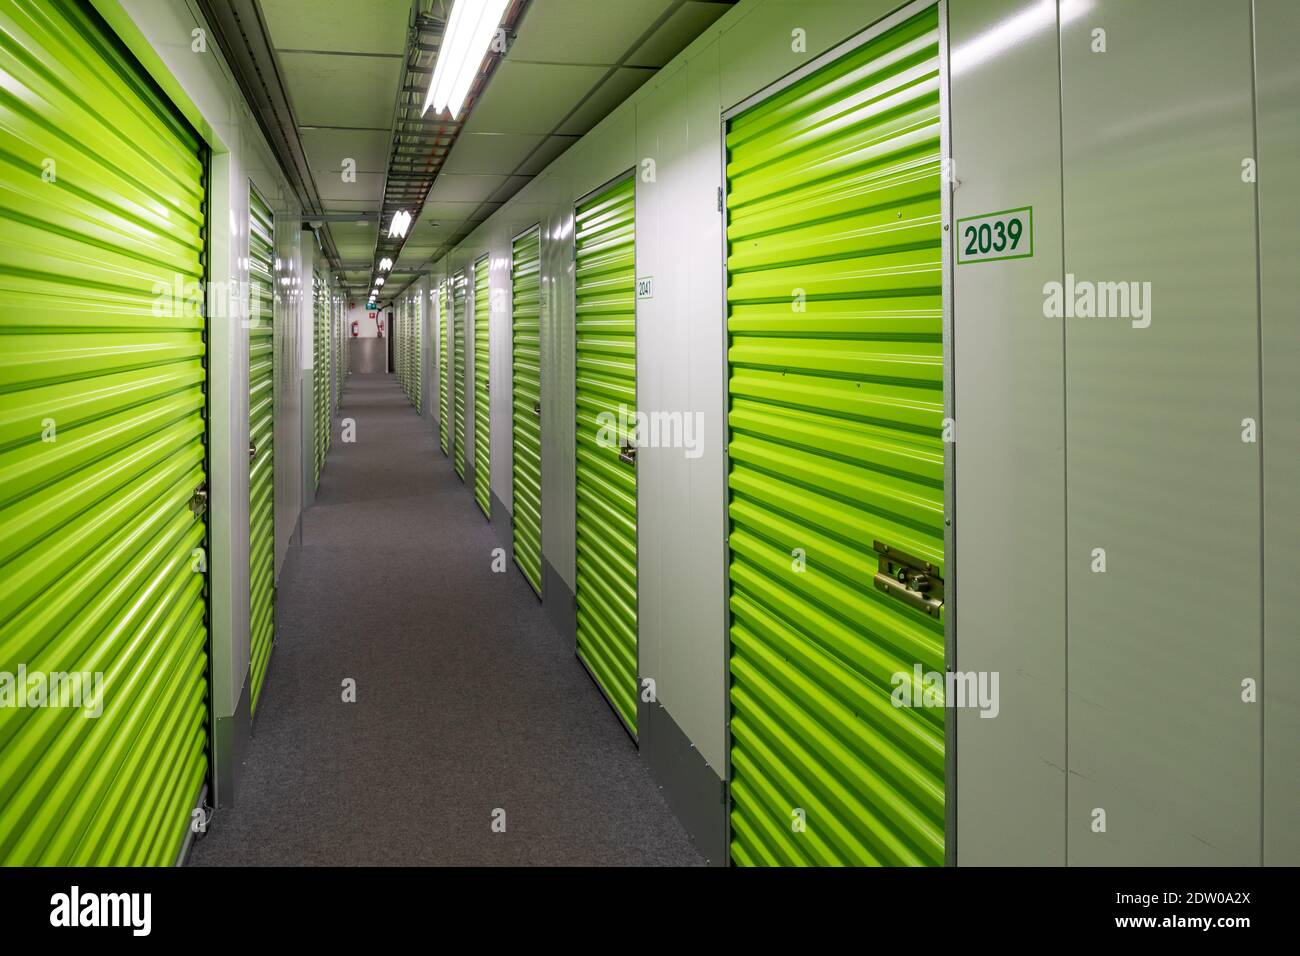 Self-storage corridor with green doors Stock Photo